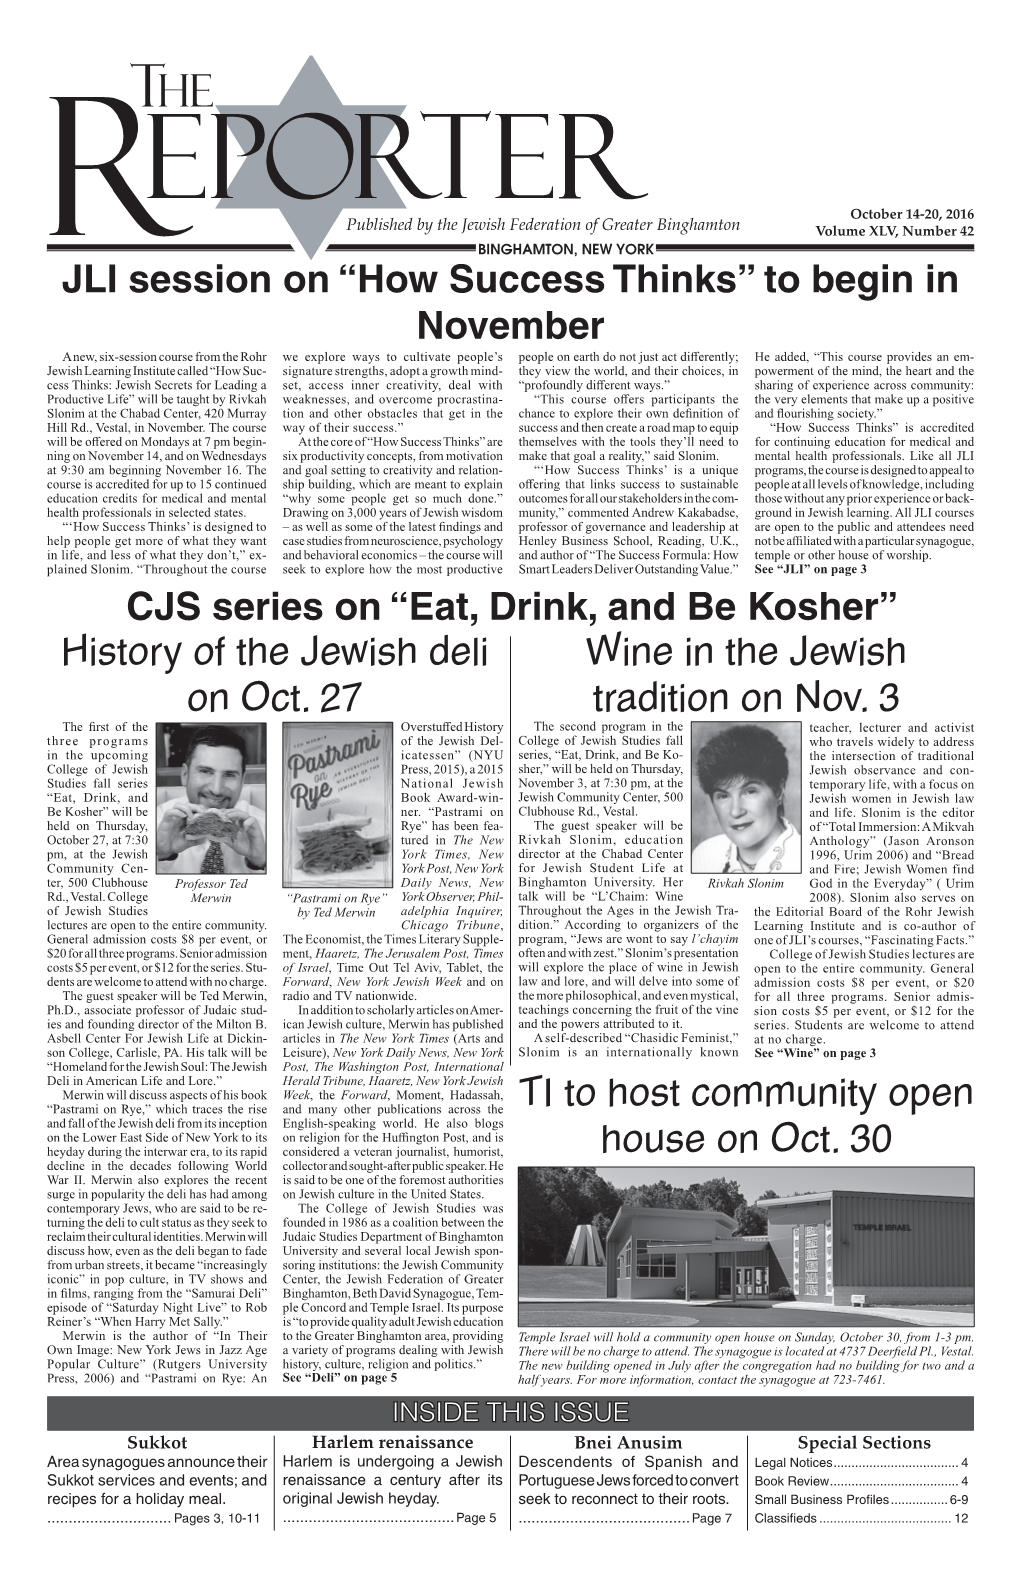 History of the Jewish Deli on Oct. 27 W